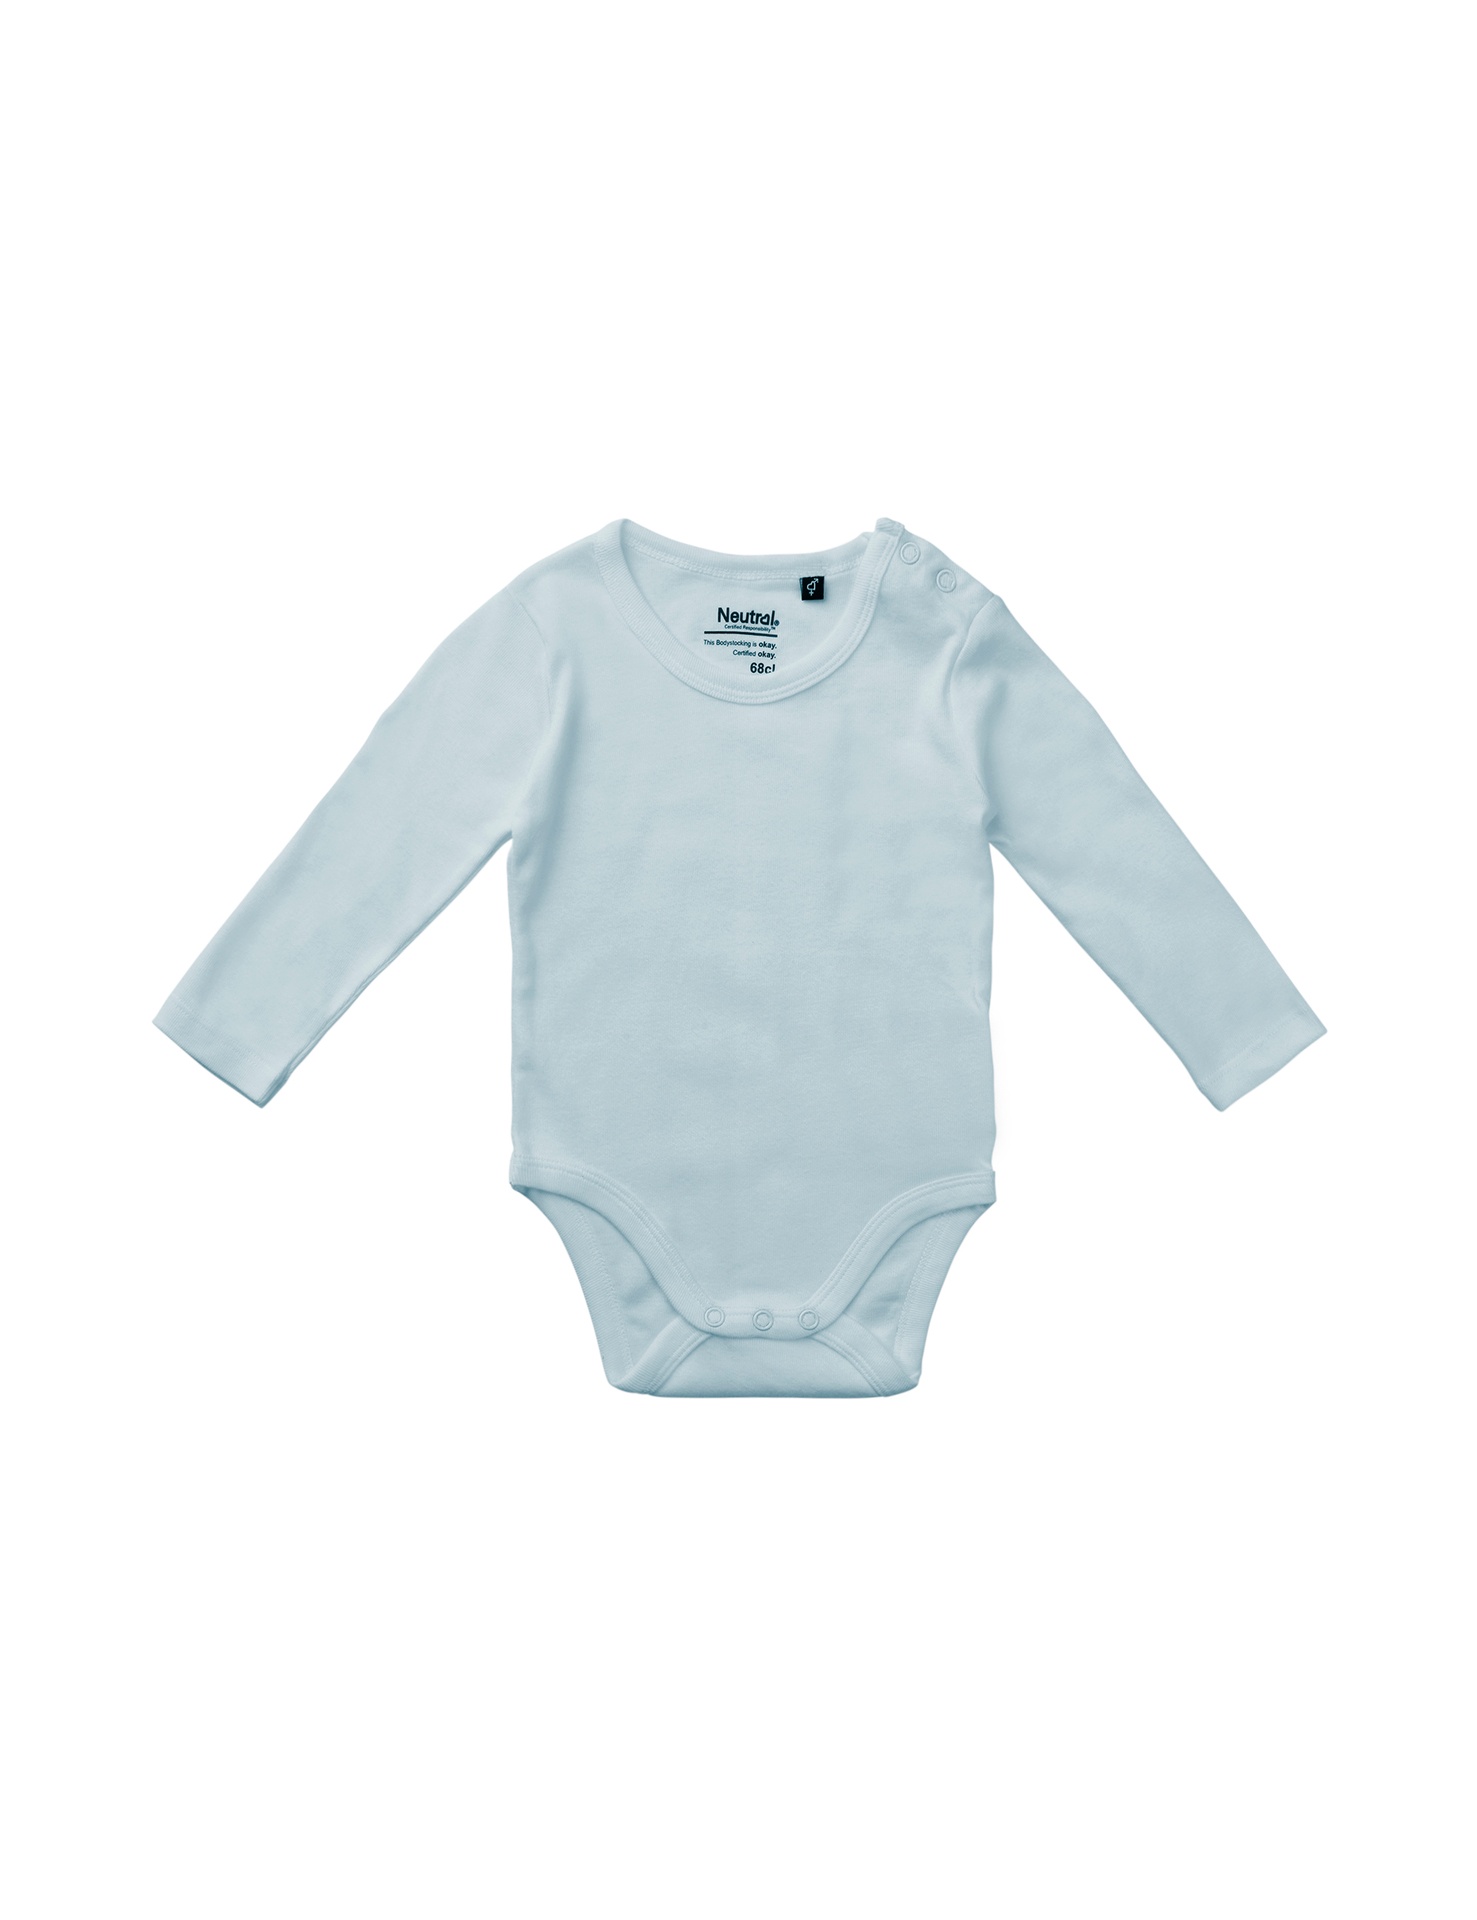 [PR/05756] Babies Long Sleeve Bodystocking (Light Blue 69, 68 cm)